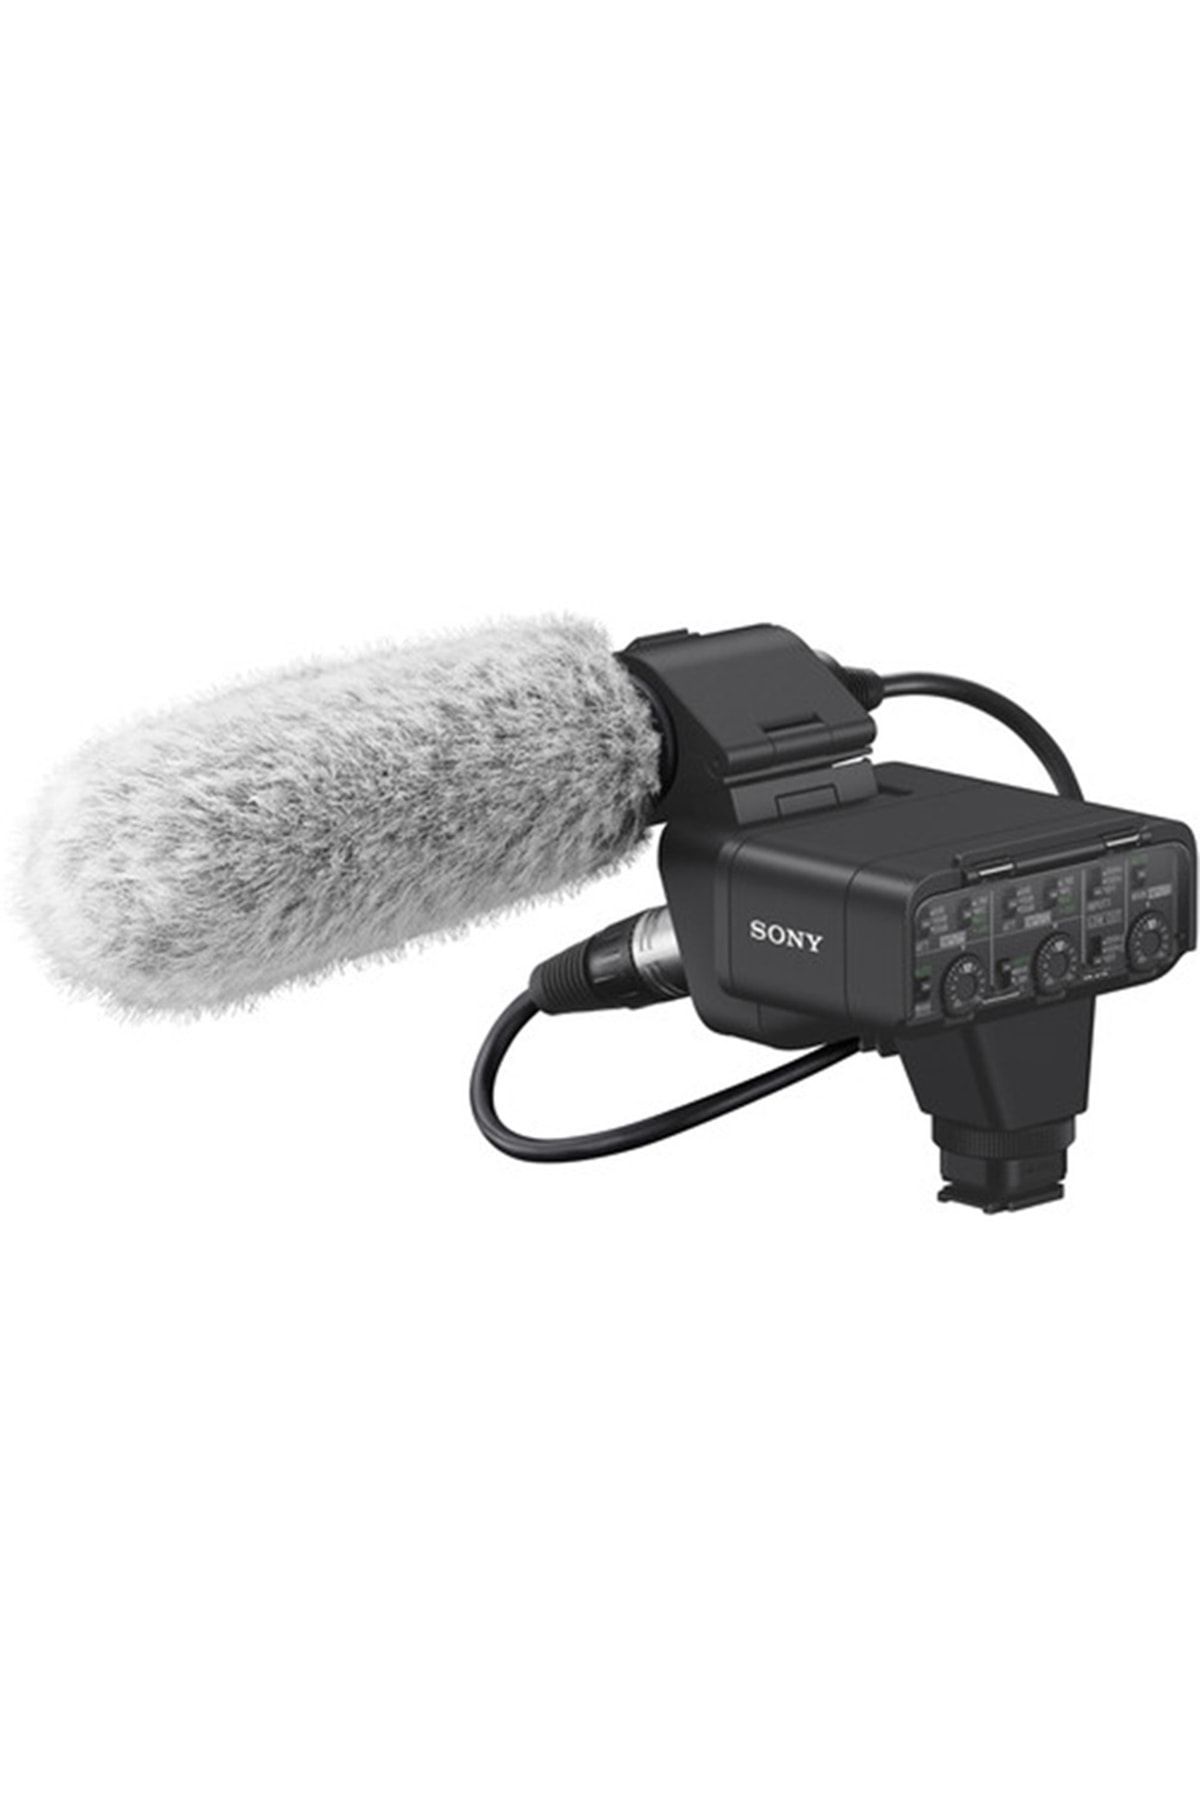 Sony Xlr-k3m Audio Adapter Kit Shotgun Mikrofon